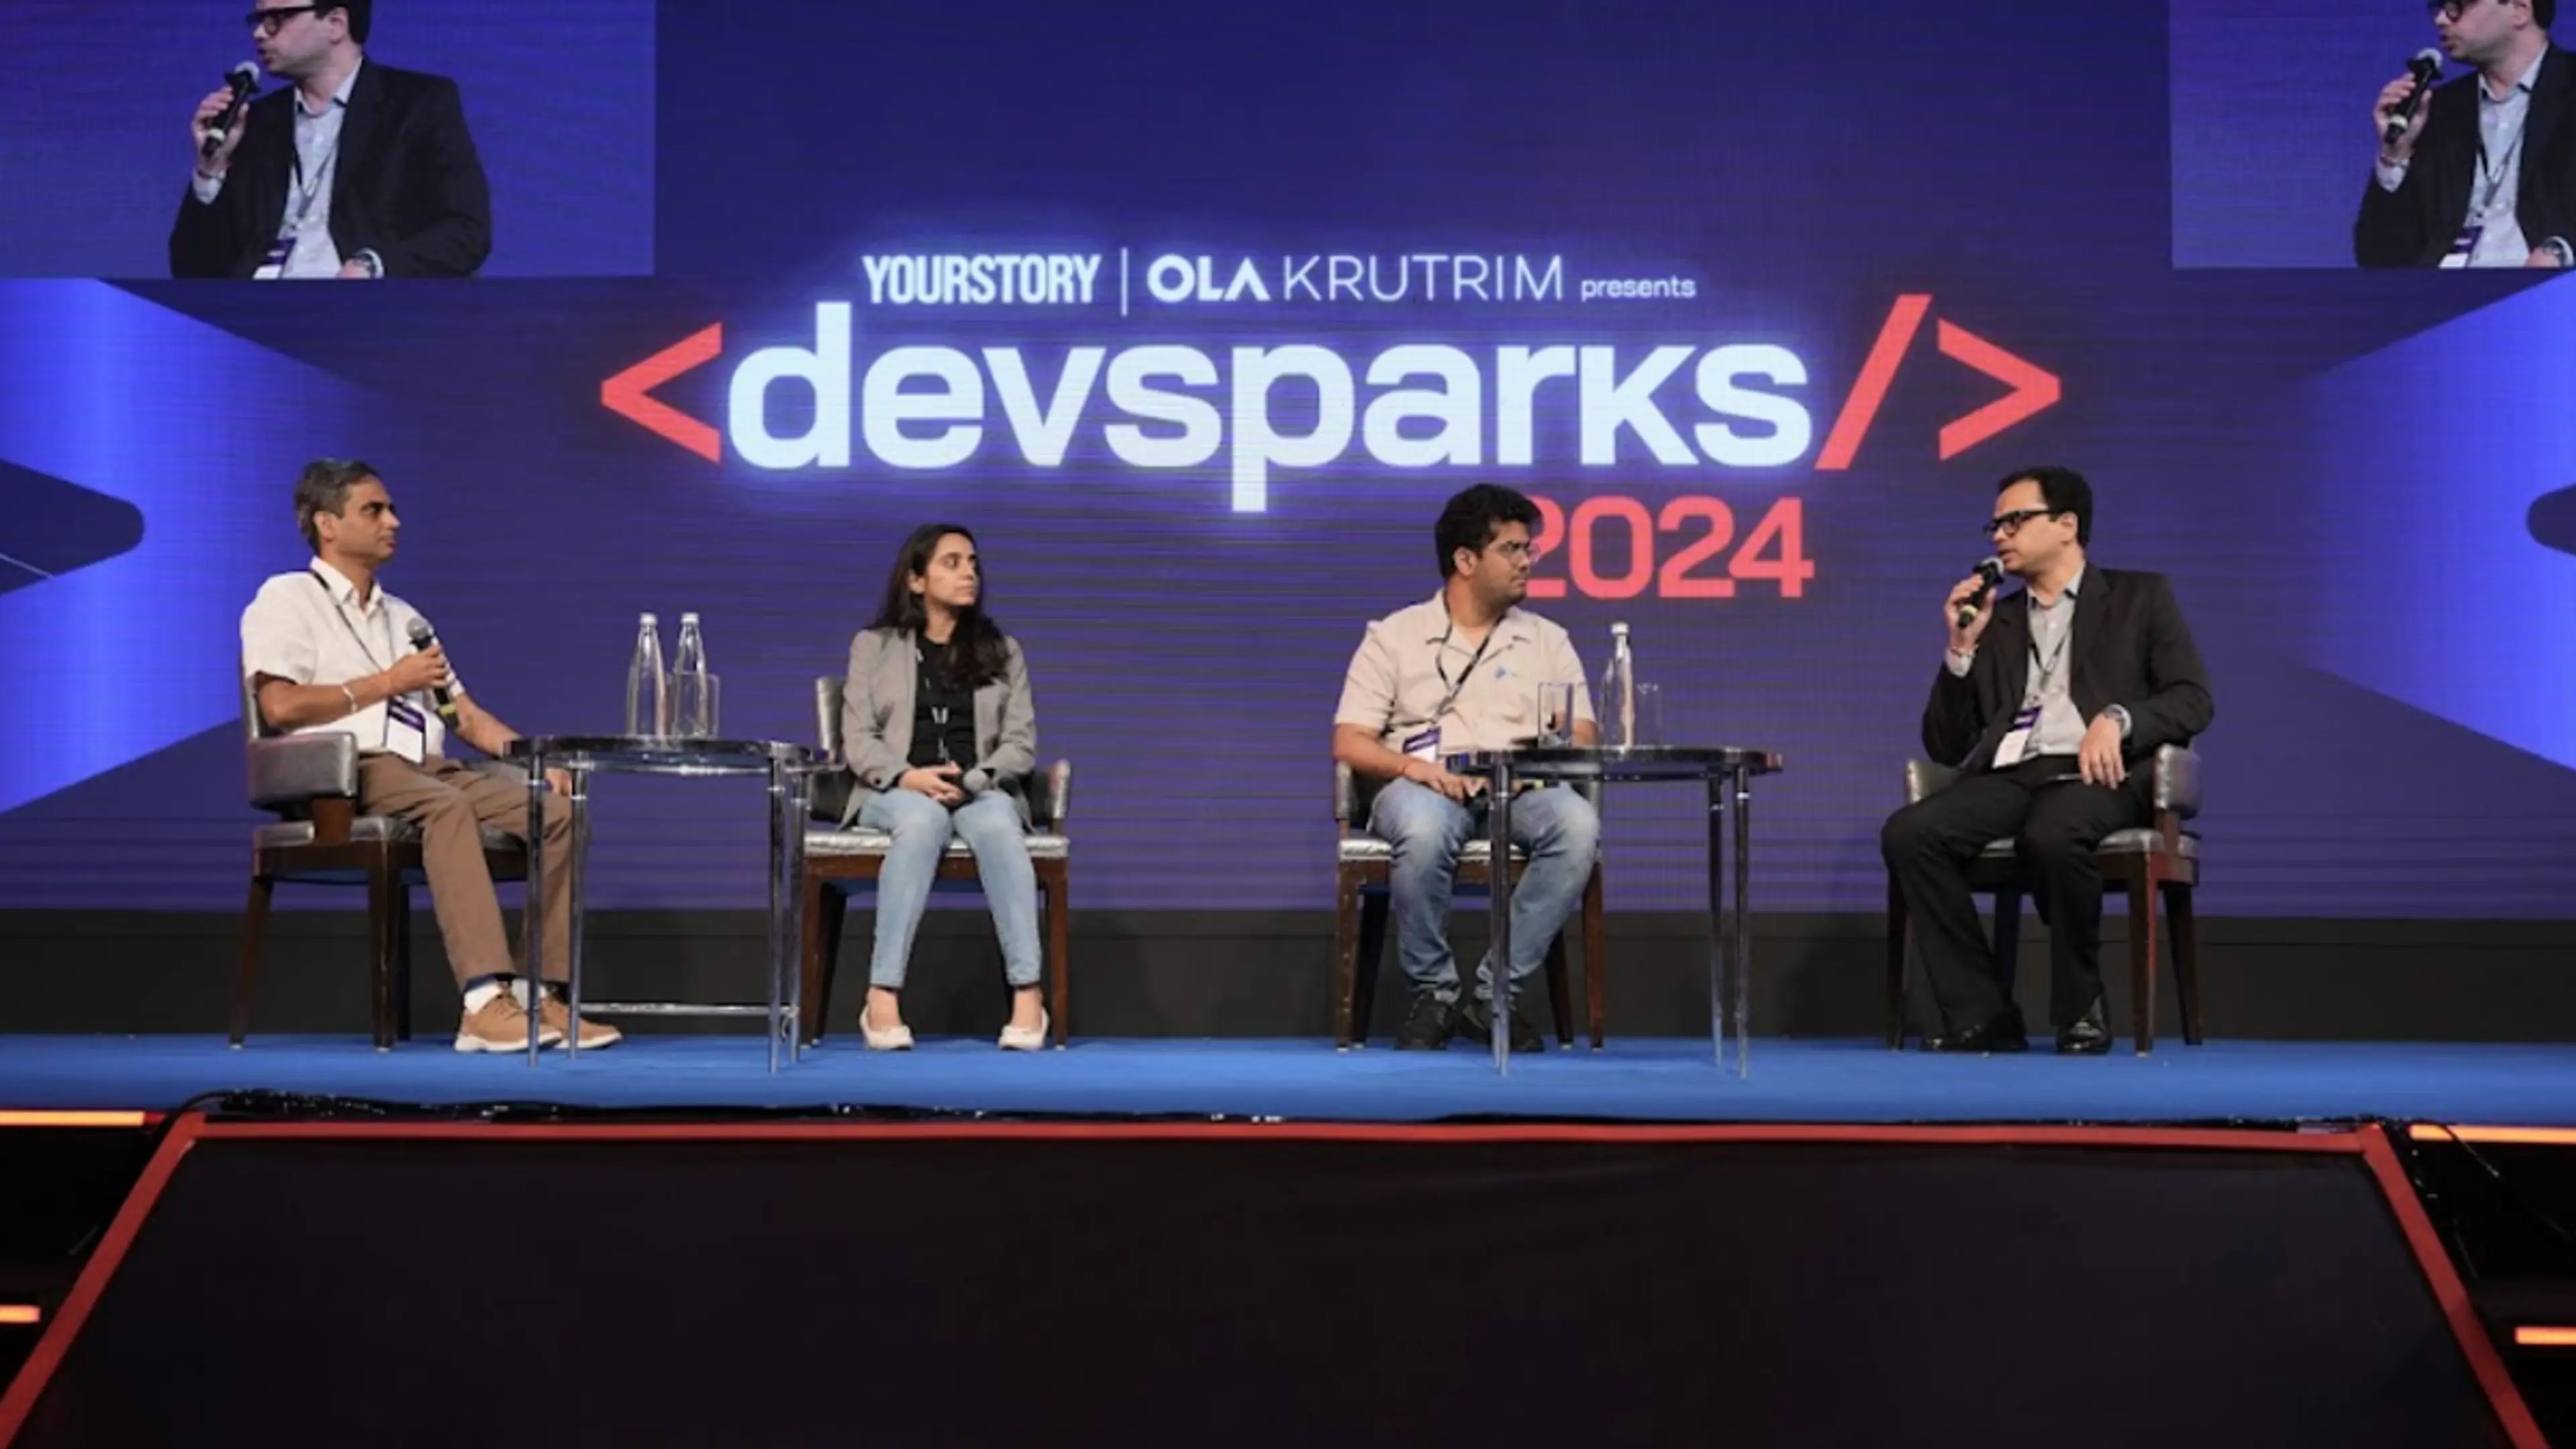 Web3 experts debate the future of public vs private blockchains at DevSparks 2024